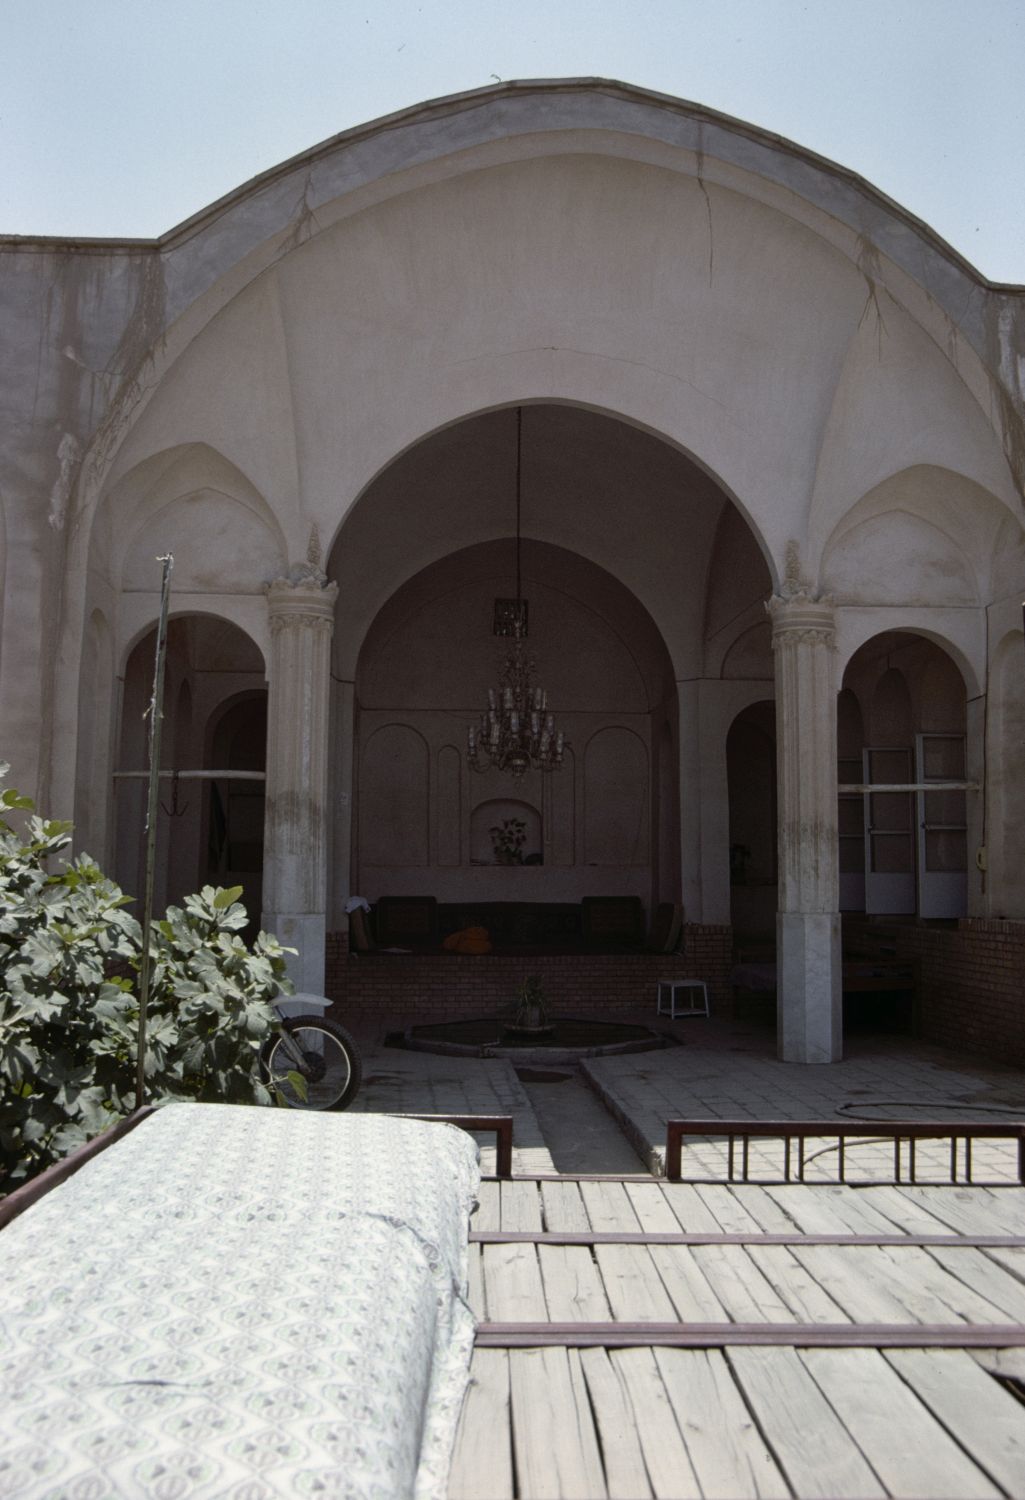 Khanah-i Yiganah - View of iwan opening onto courtyard.